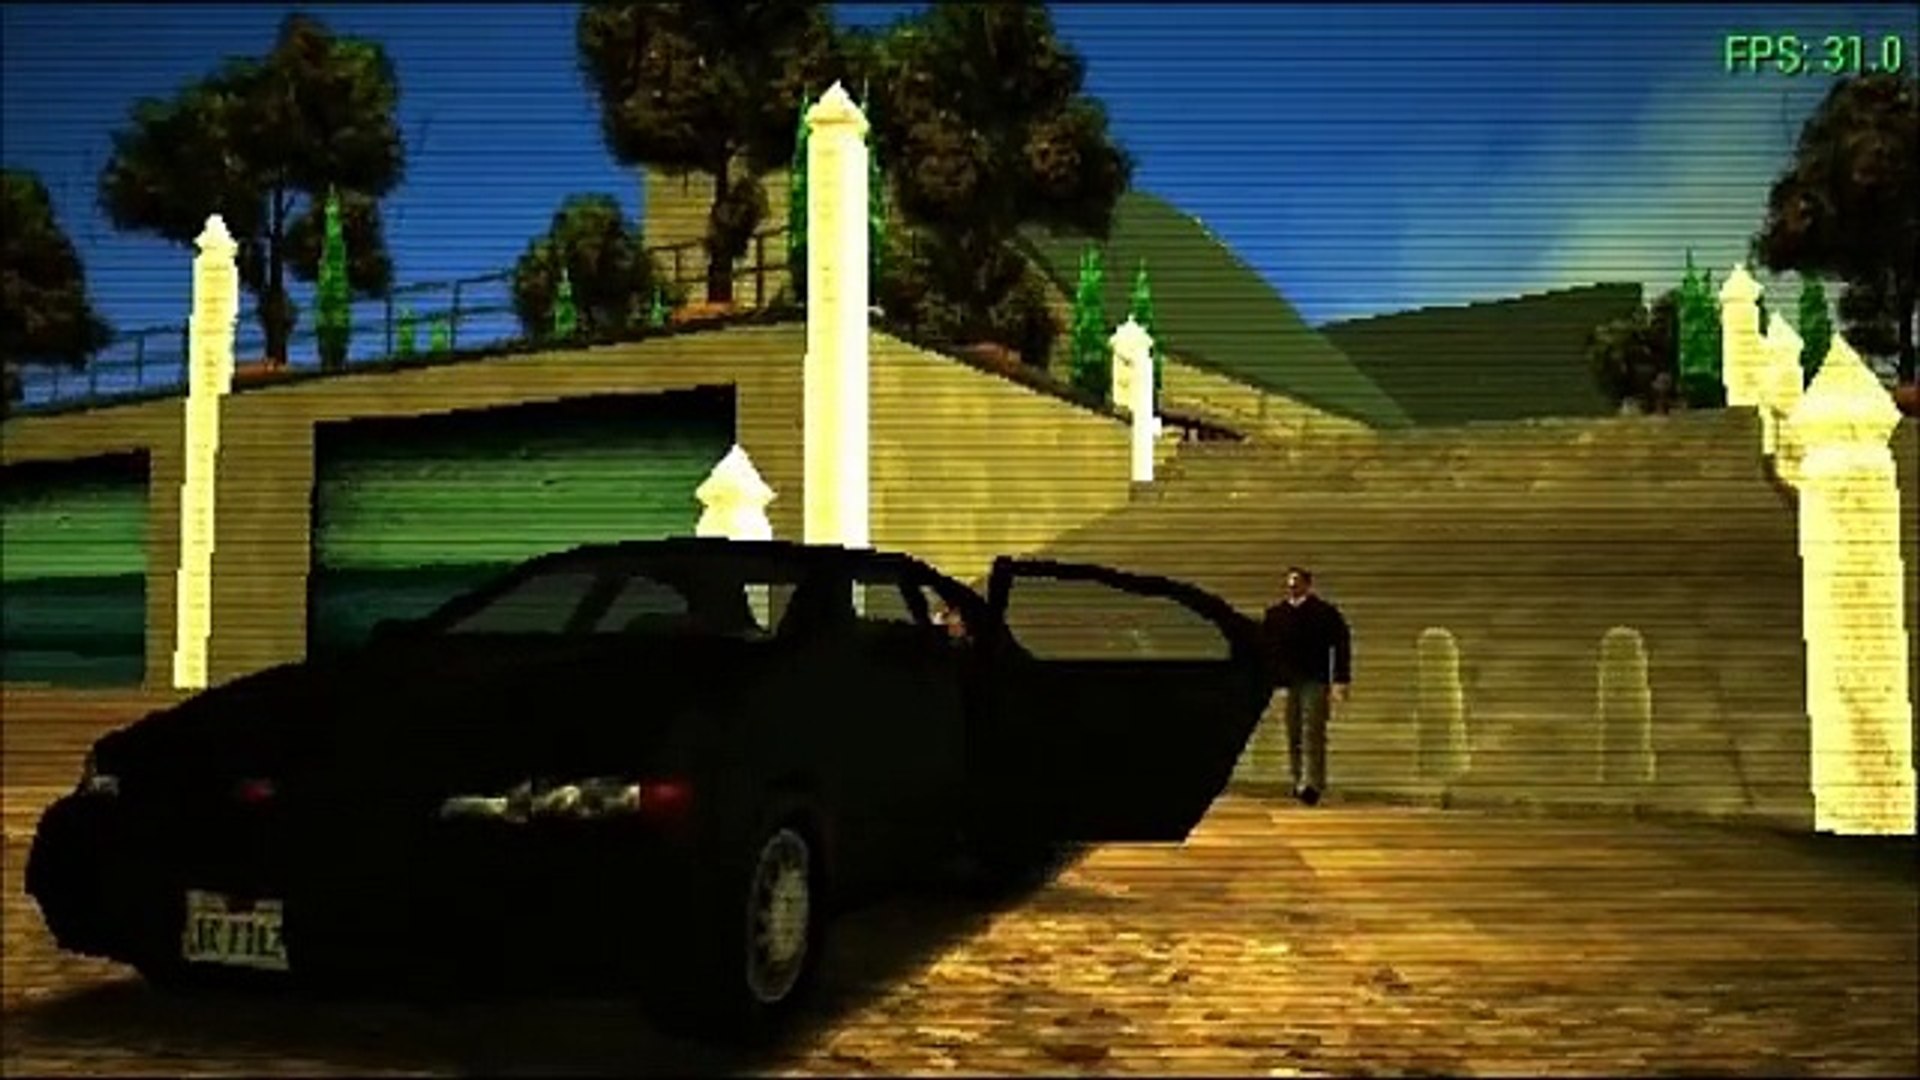 Grand Theft Auto: Liberty City Stories - PSP Gameplay 1080p